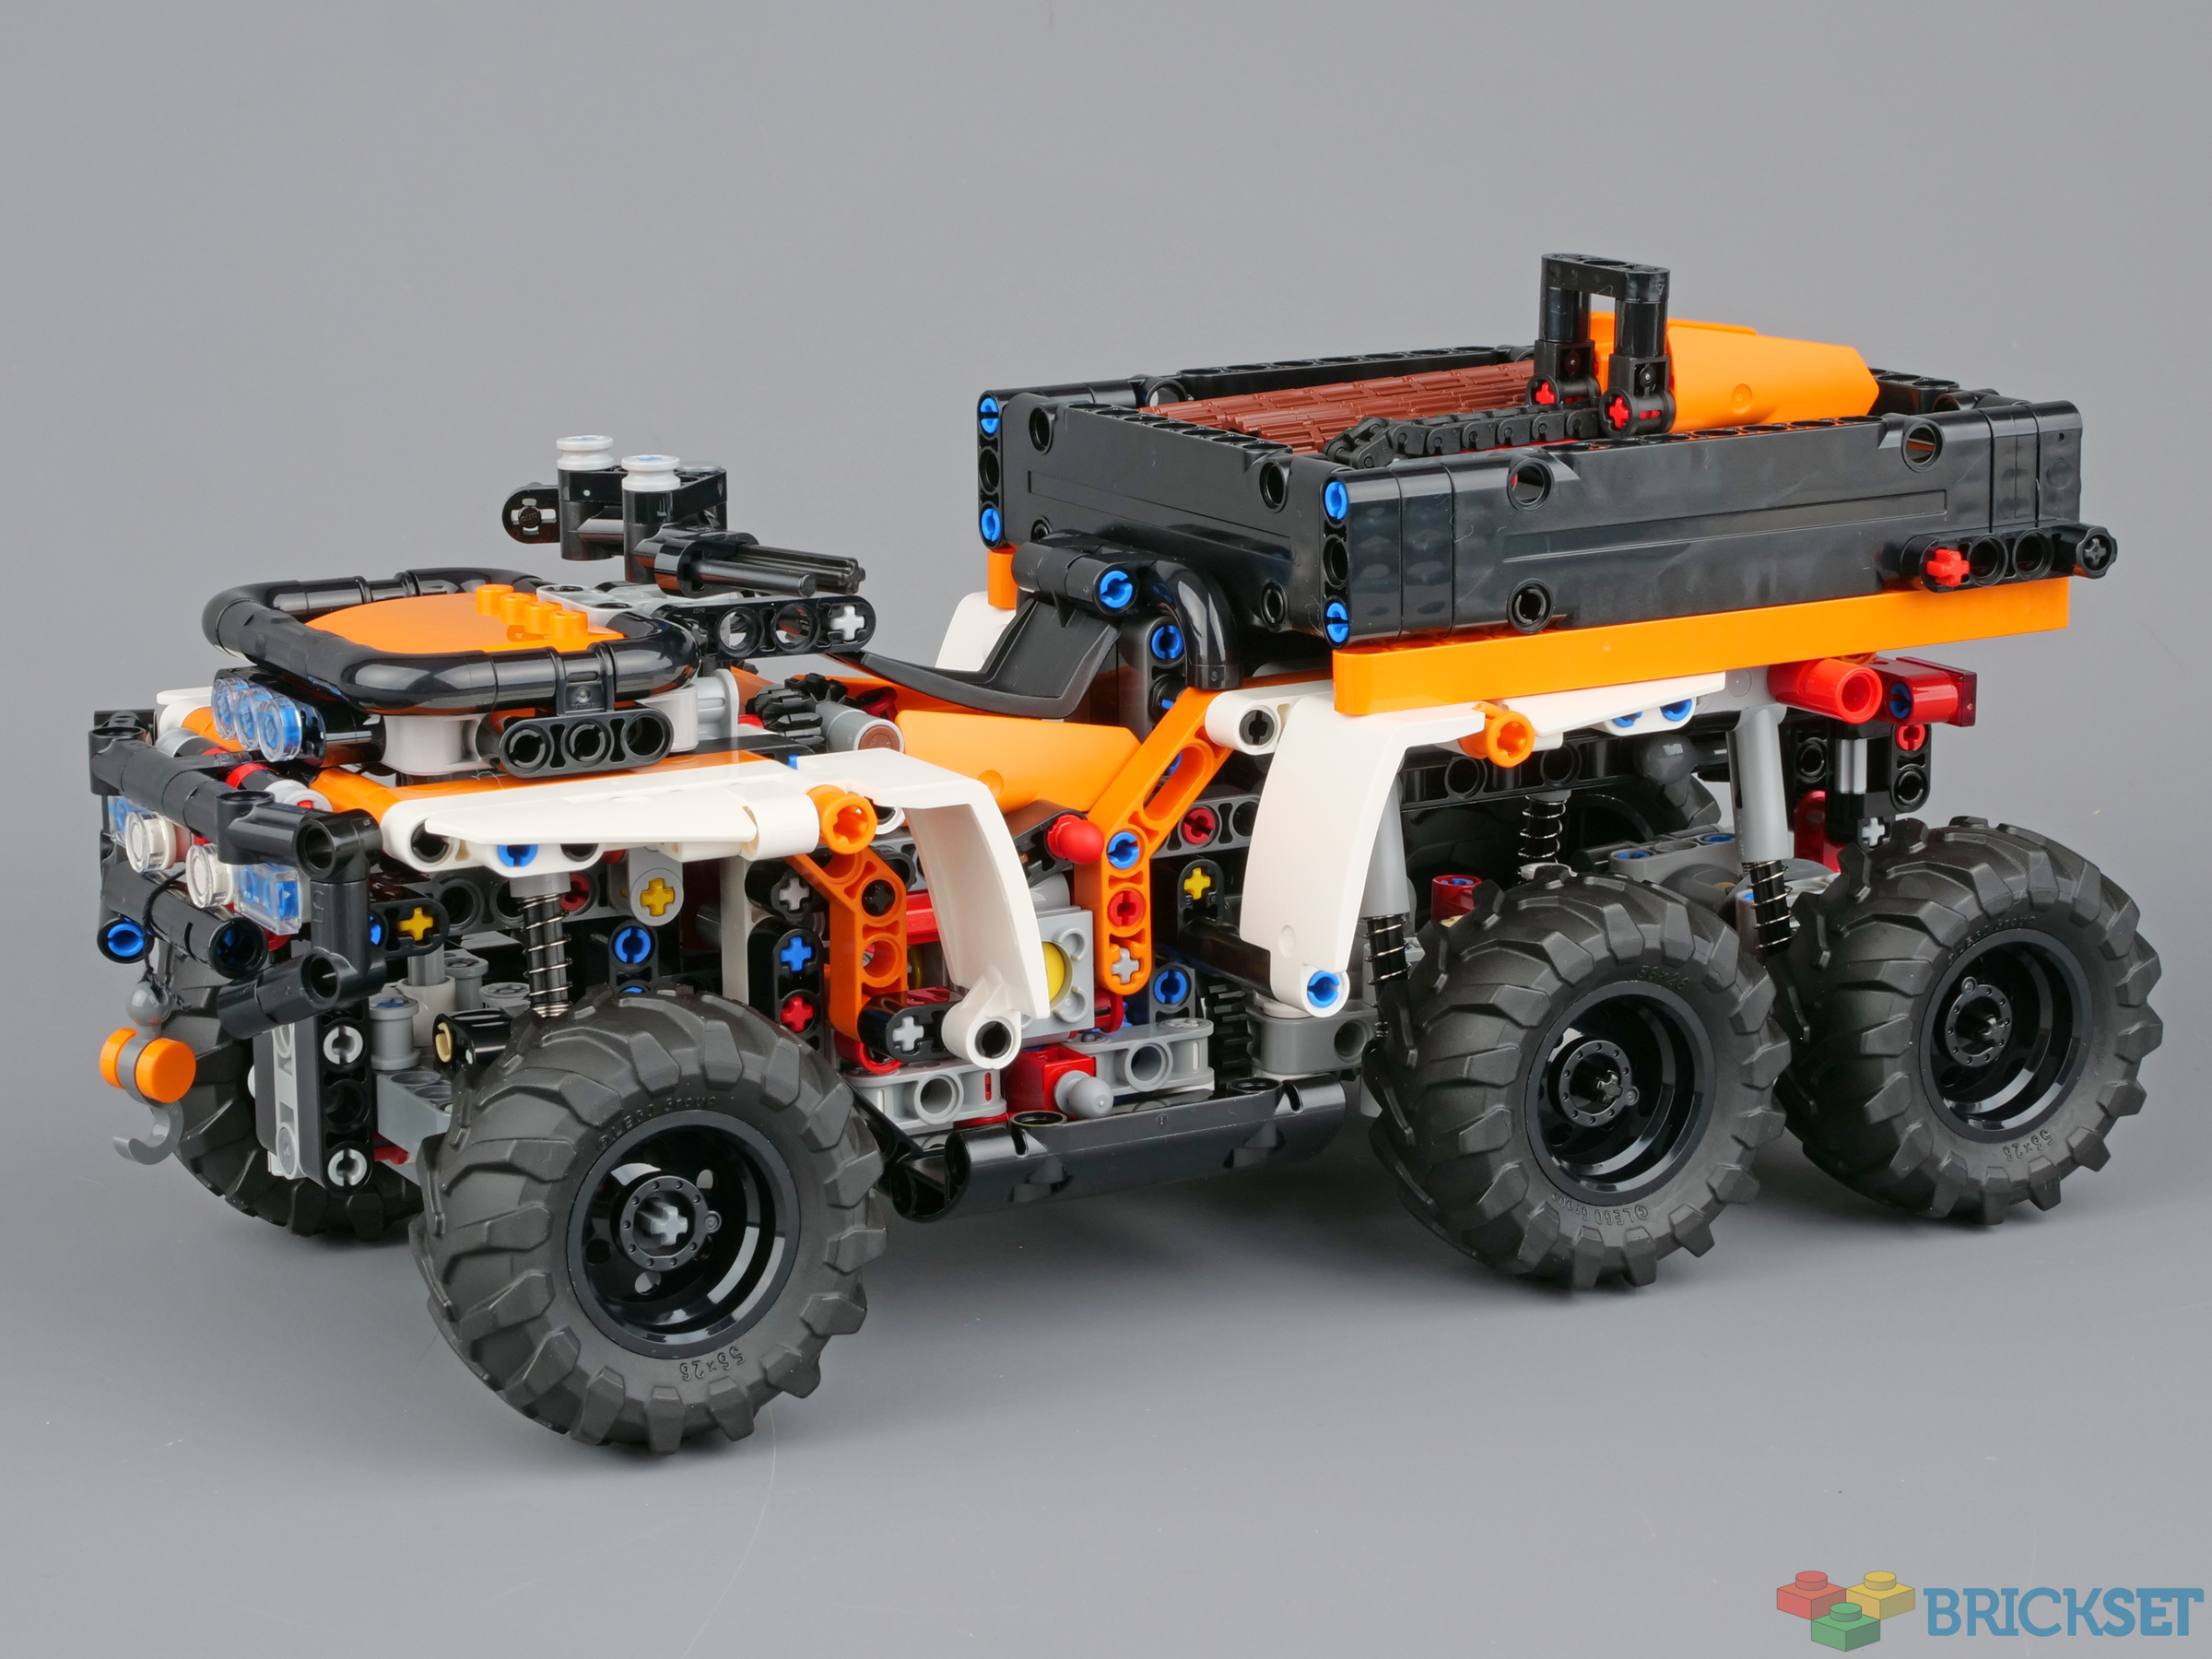 3 new LEGO Technic sets revealed for Spring 2022, including ATV